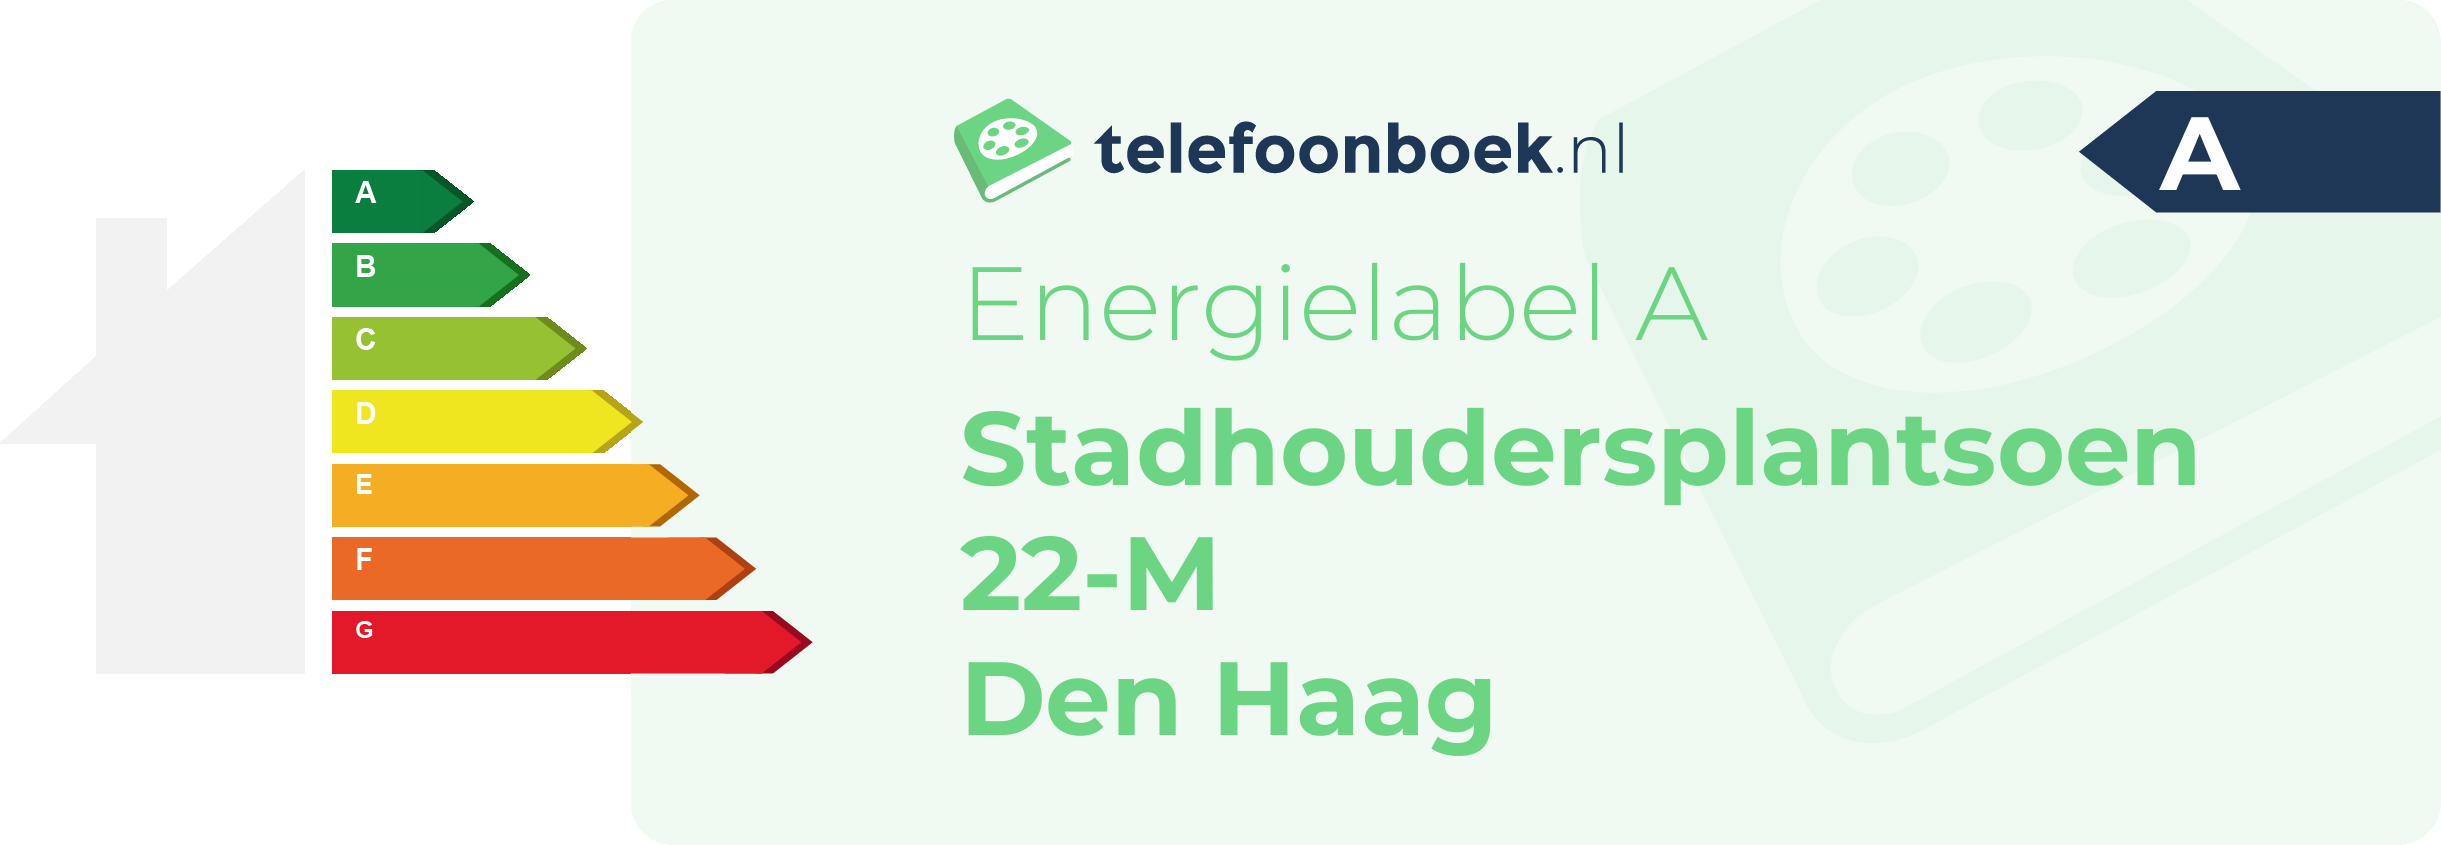 Energielabel Stadhoudersplantsoen 22-M Den Haag